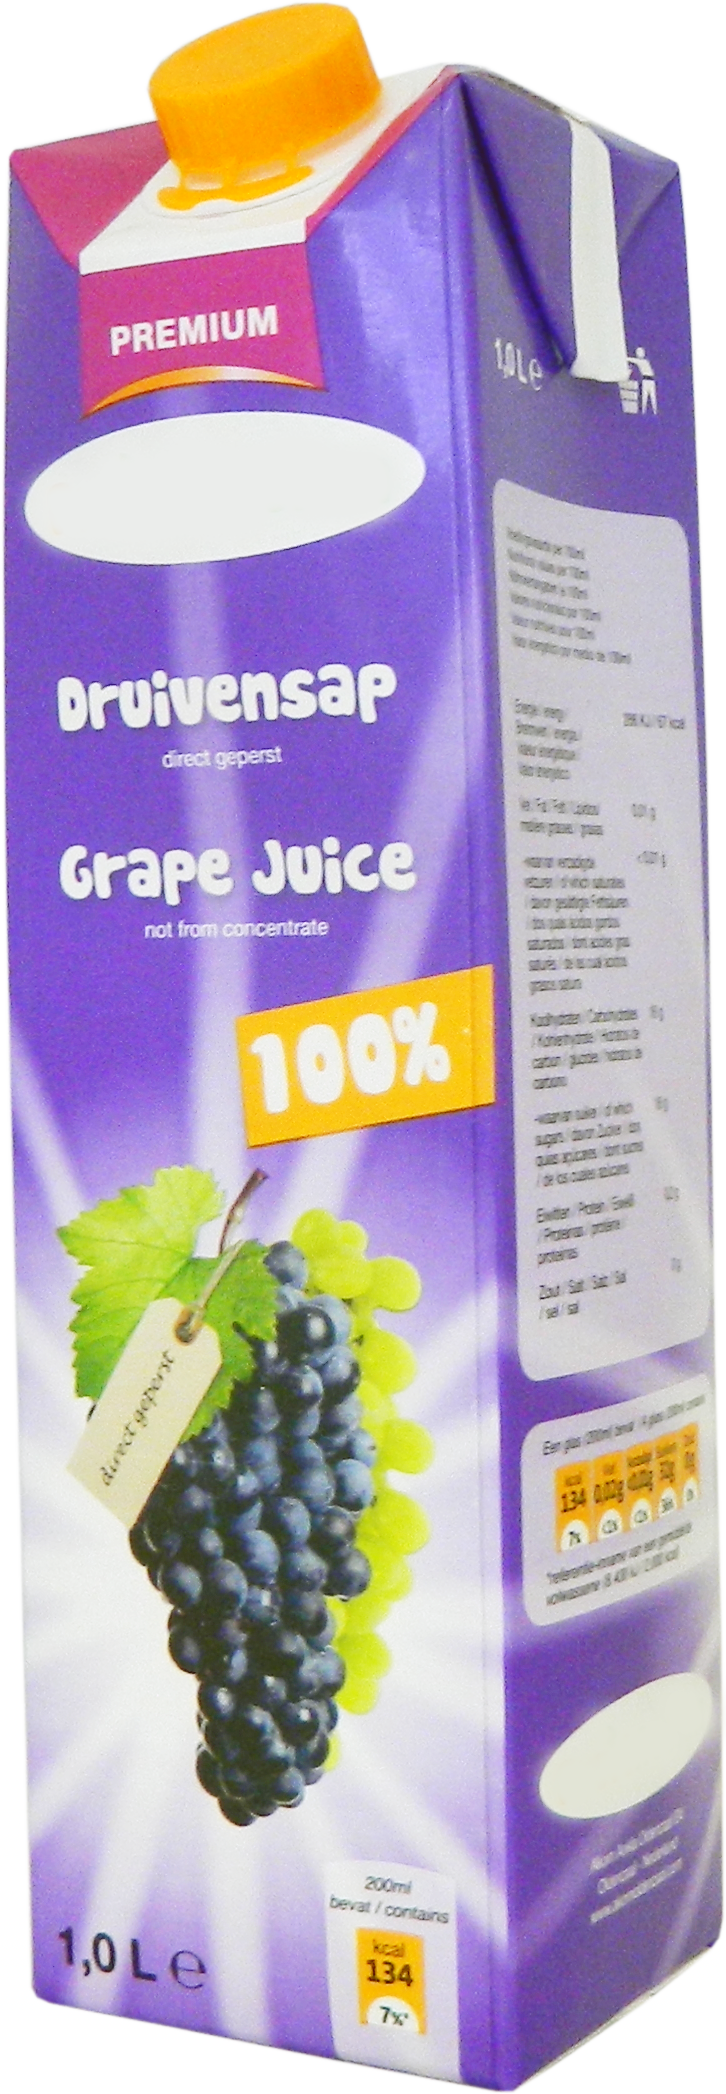 Premium Druivensap 1,0 liter